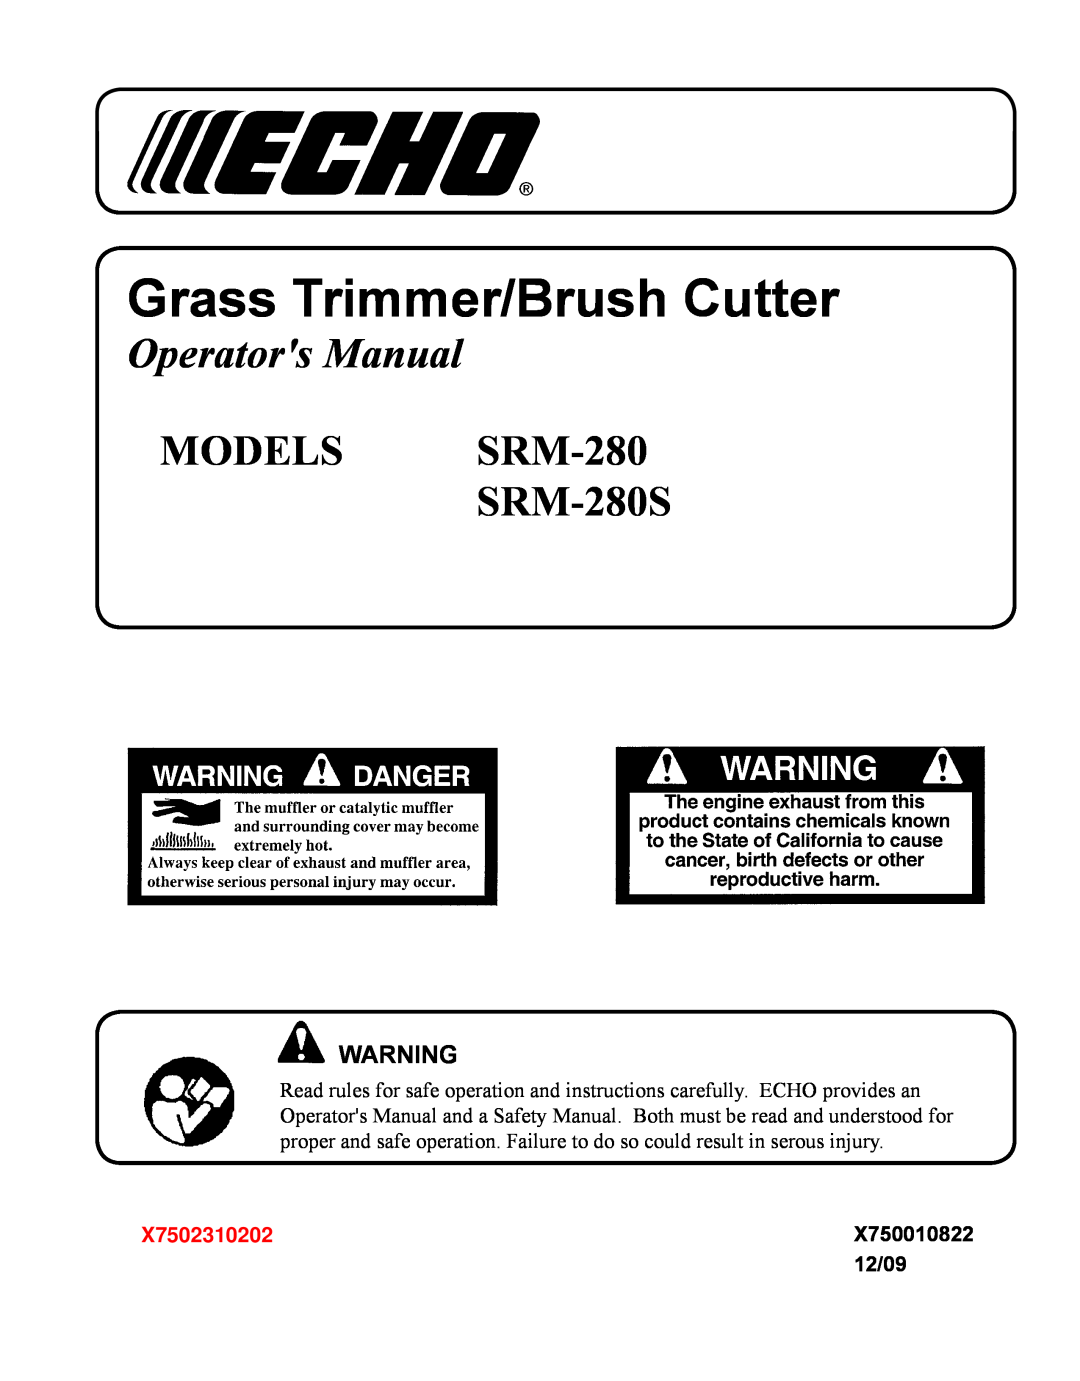 Echo manual X750231022, 12/09, Grass Trimmer/Brush Cutter, Operators Manual, MODELS SRM-280 SRM-280S, X750010822 